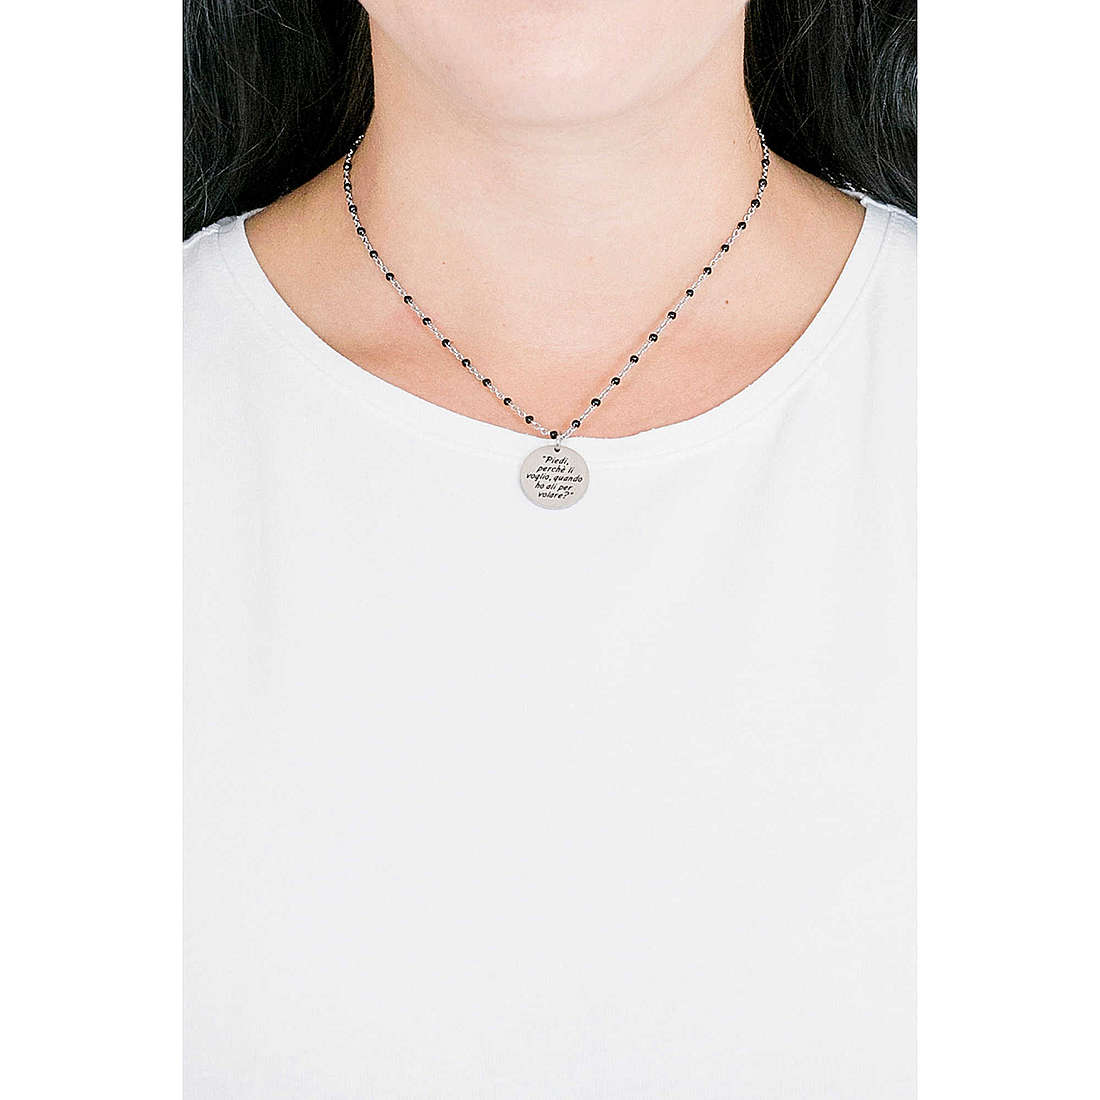 Kidult necklaces Philosophy woman 751168 wearing